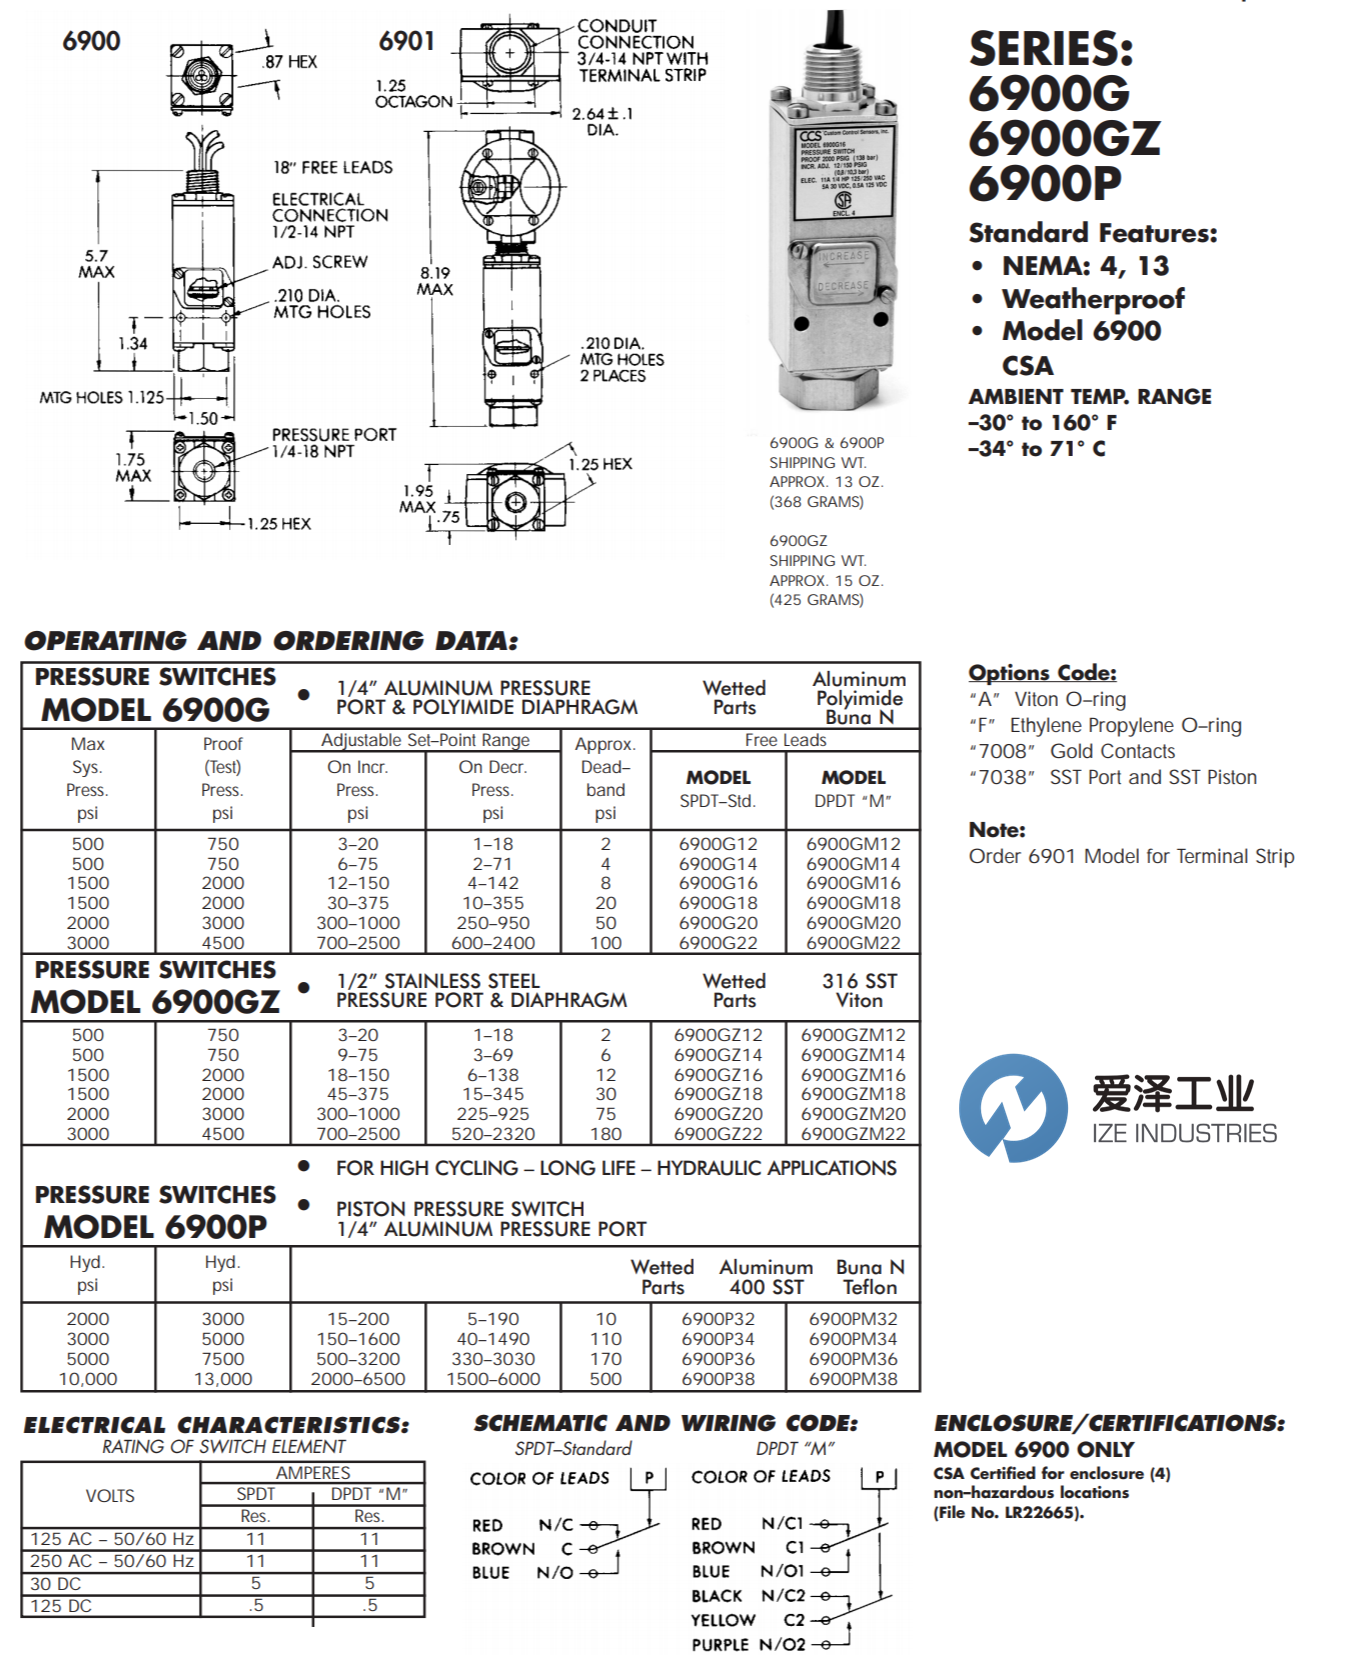 CCS传感器6900P系列 爱泽工业 izeindustries.png